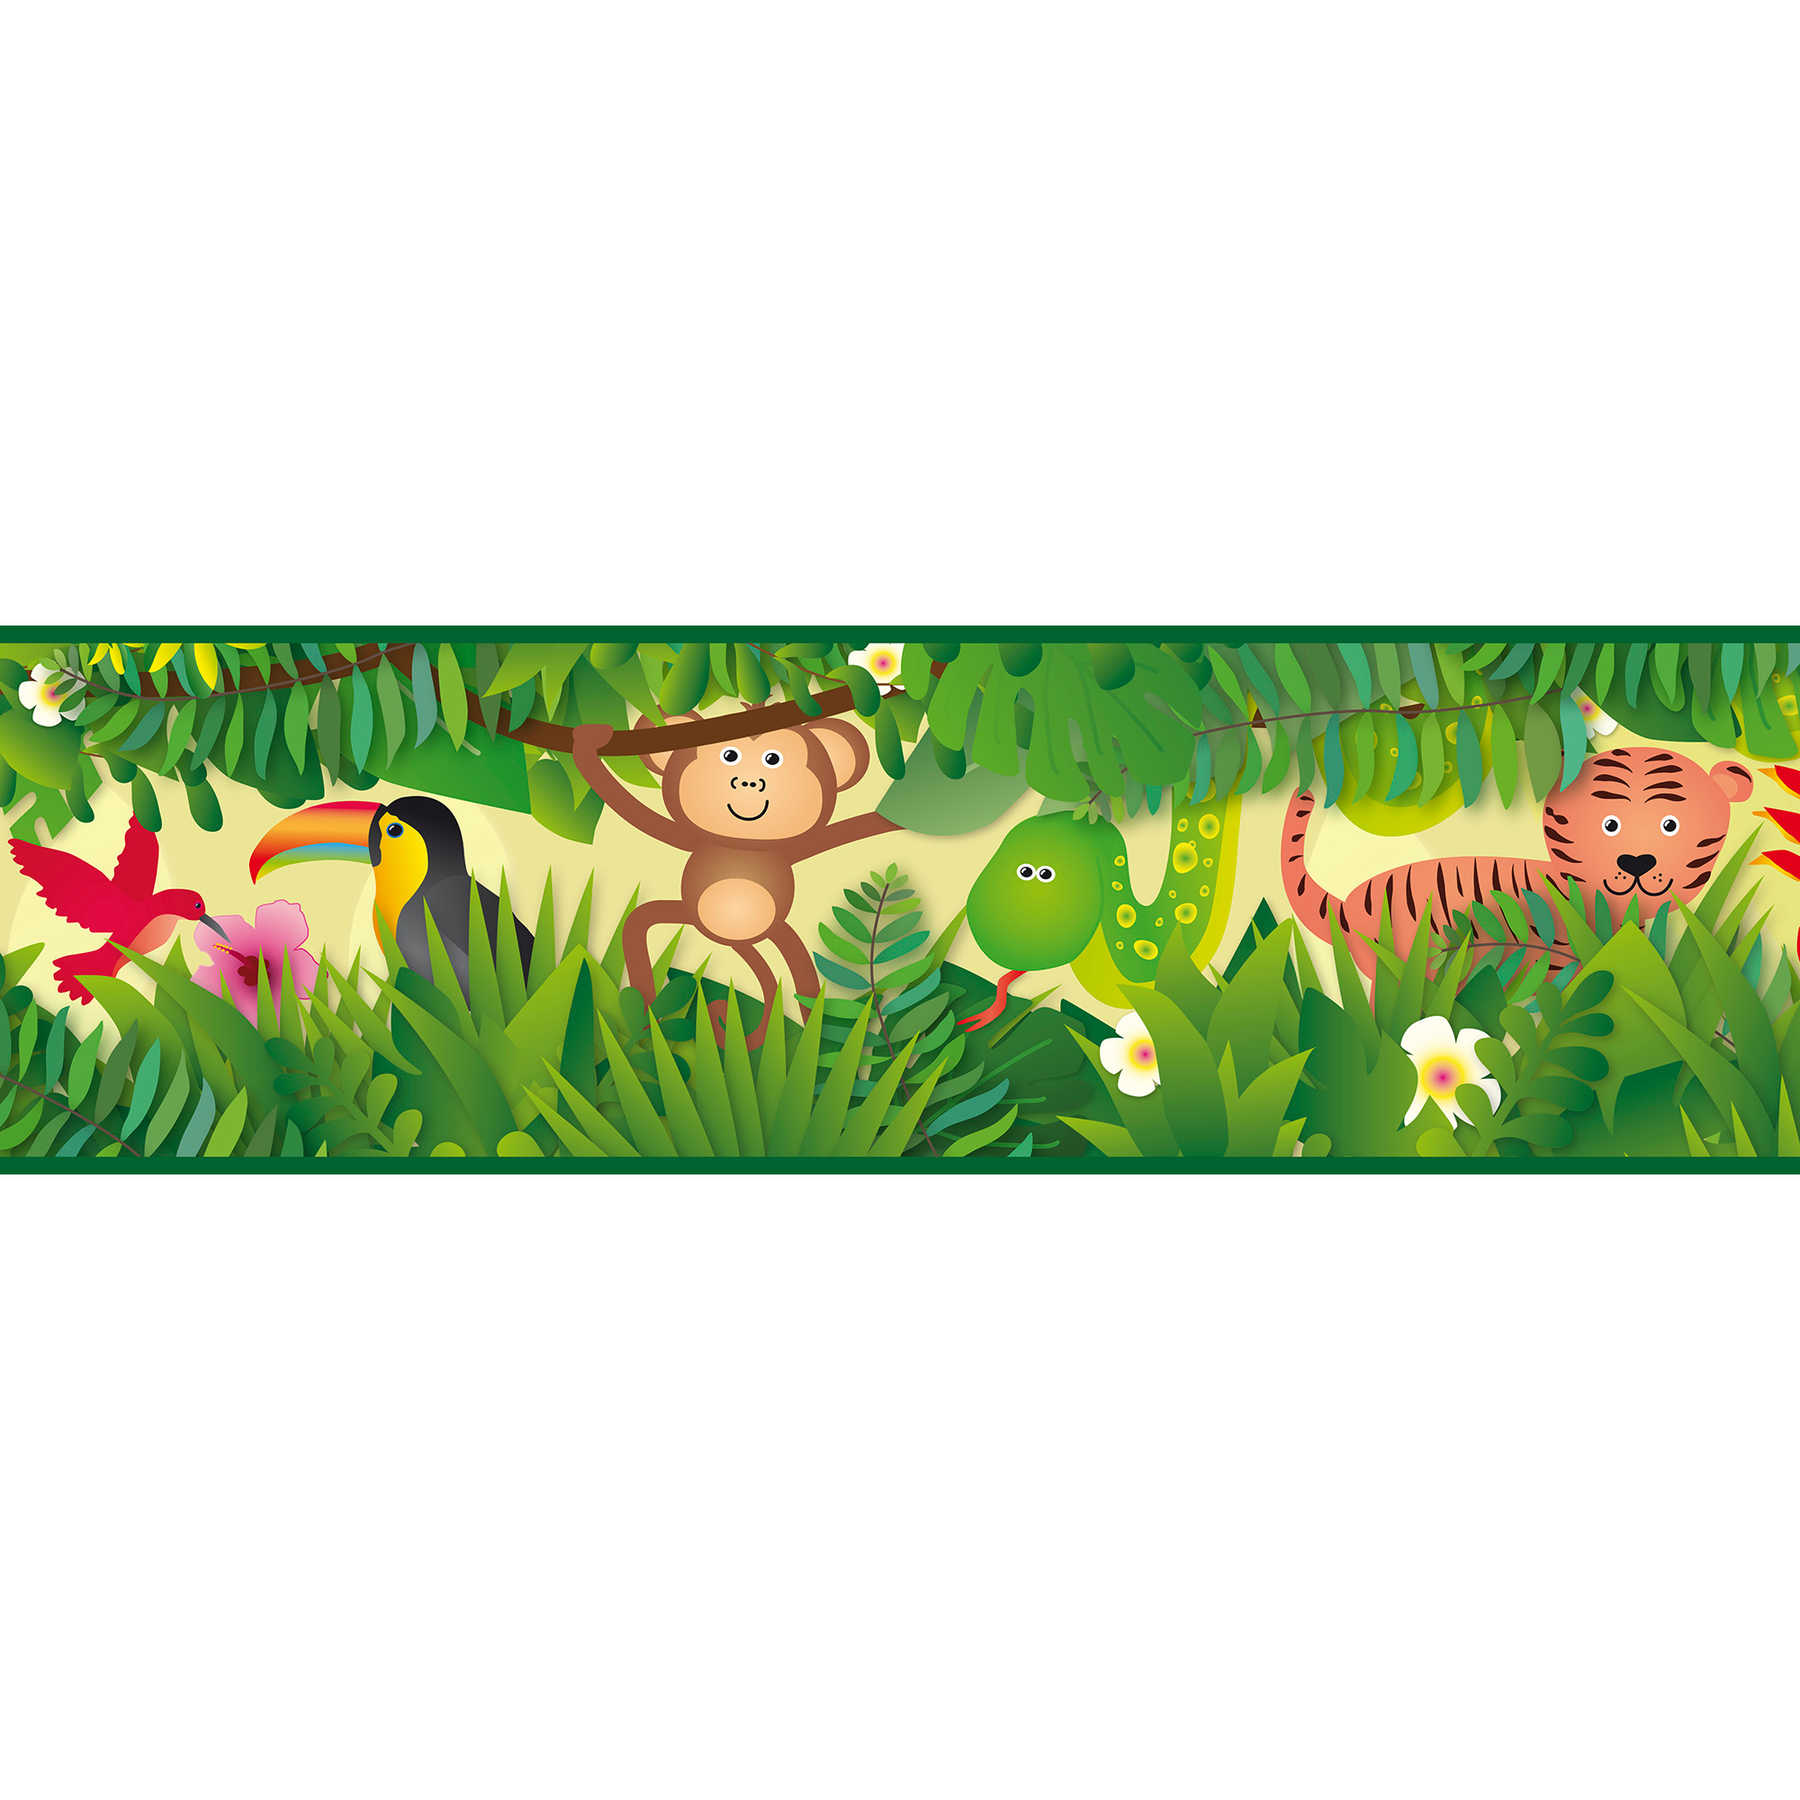         Boys wallpaper "Jungle Paradise" self-adhesive border - green, brown, red
    